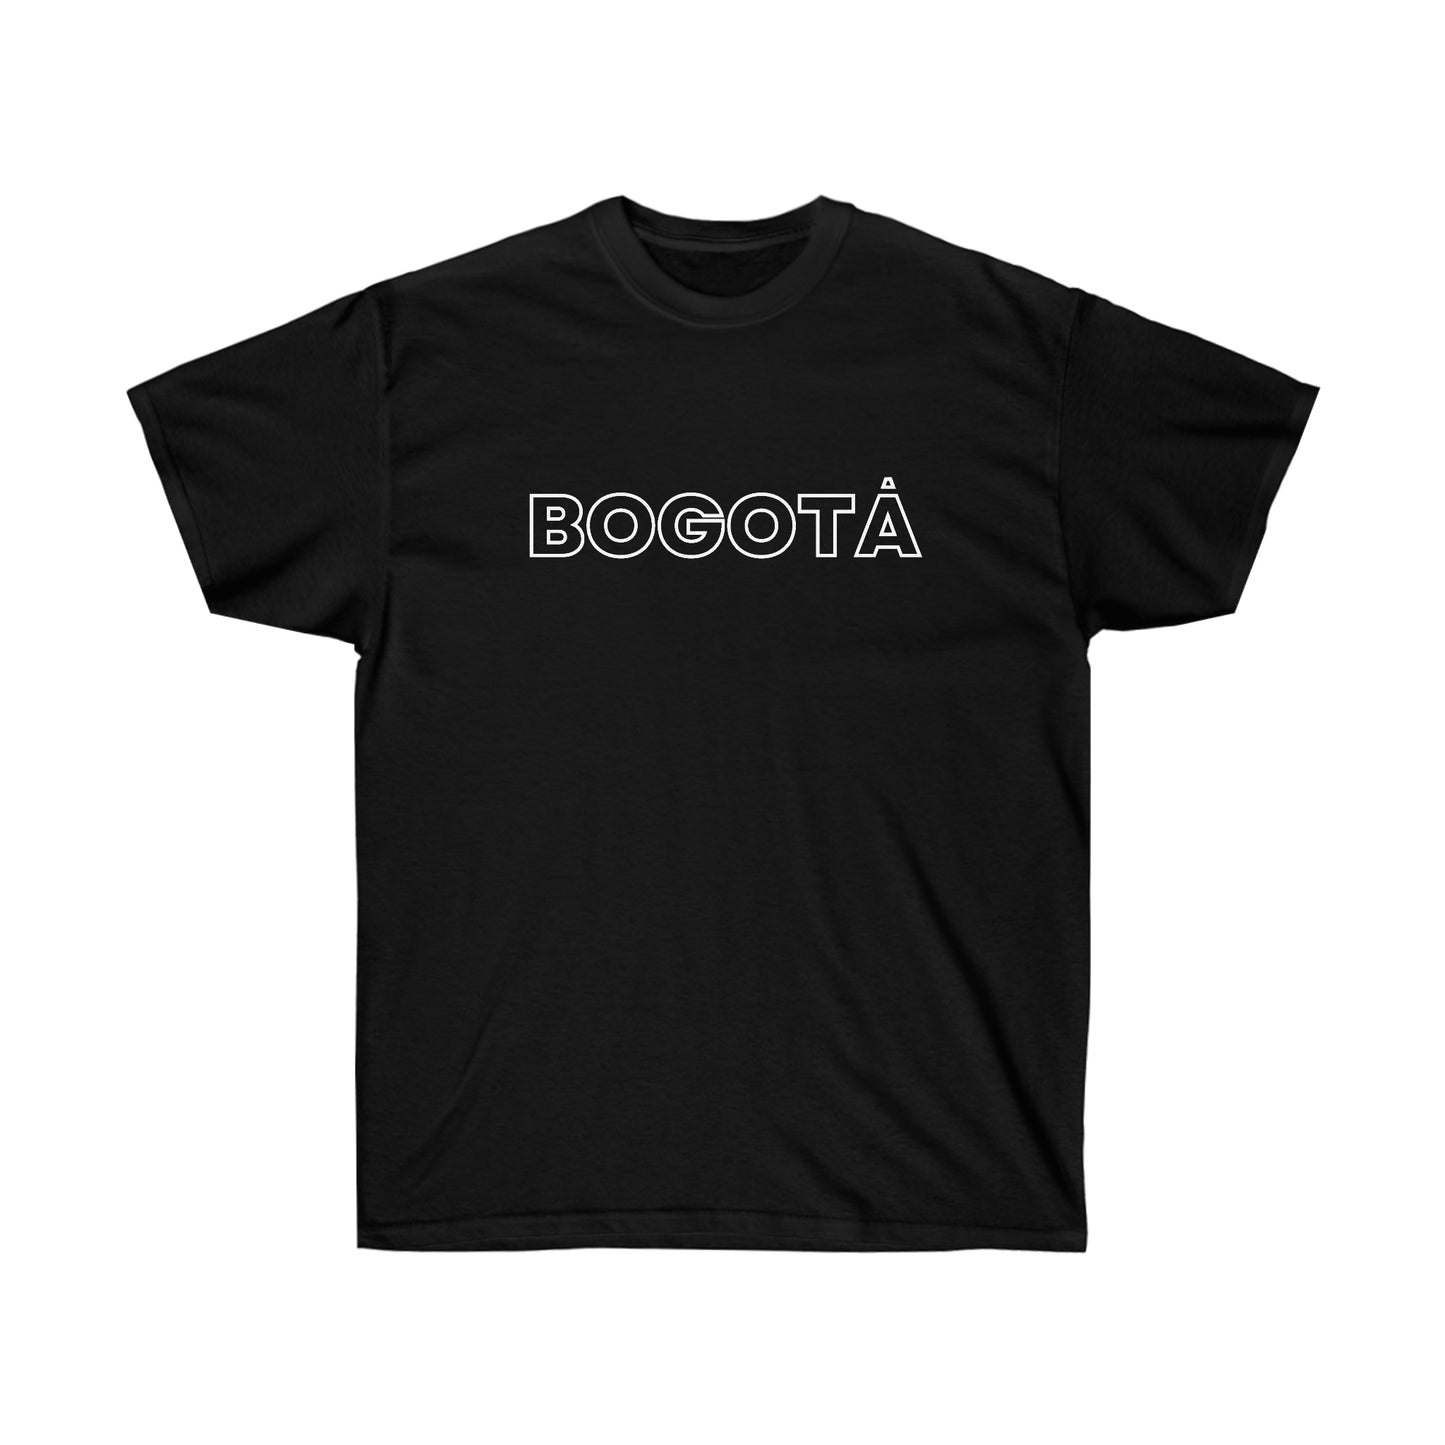 BOGOTA - Unisex Ultra Cotton Tee